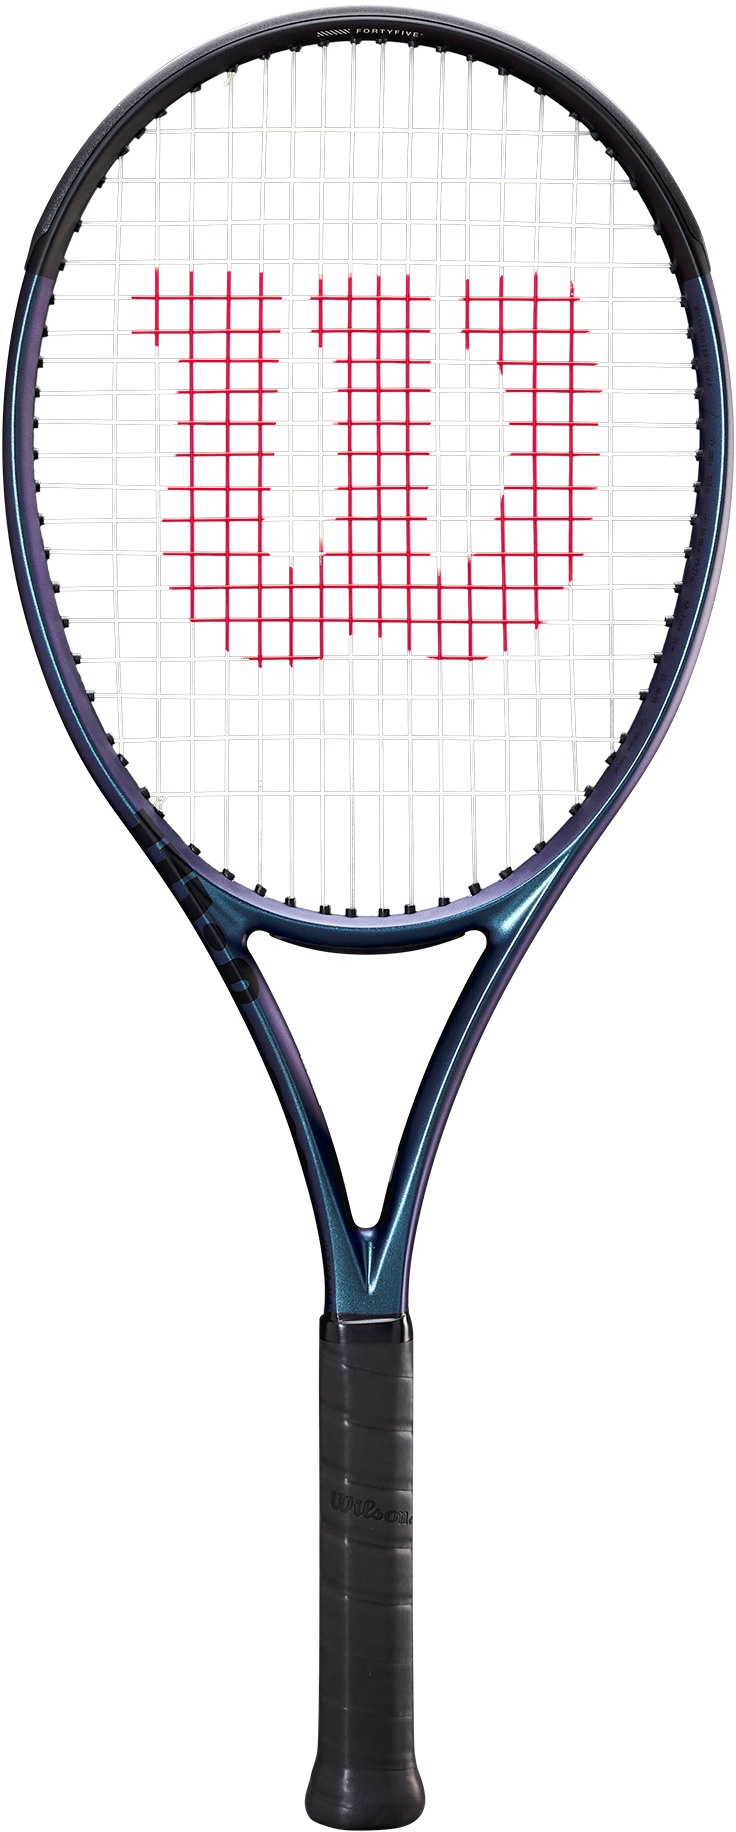 Performance tennis racket